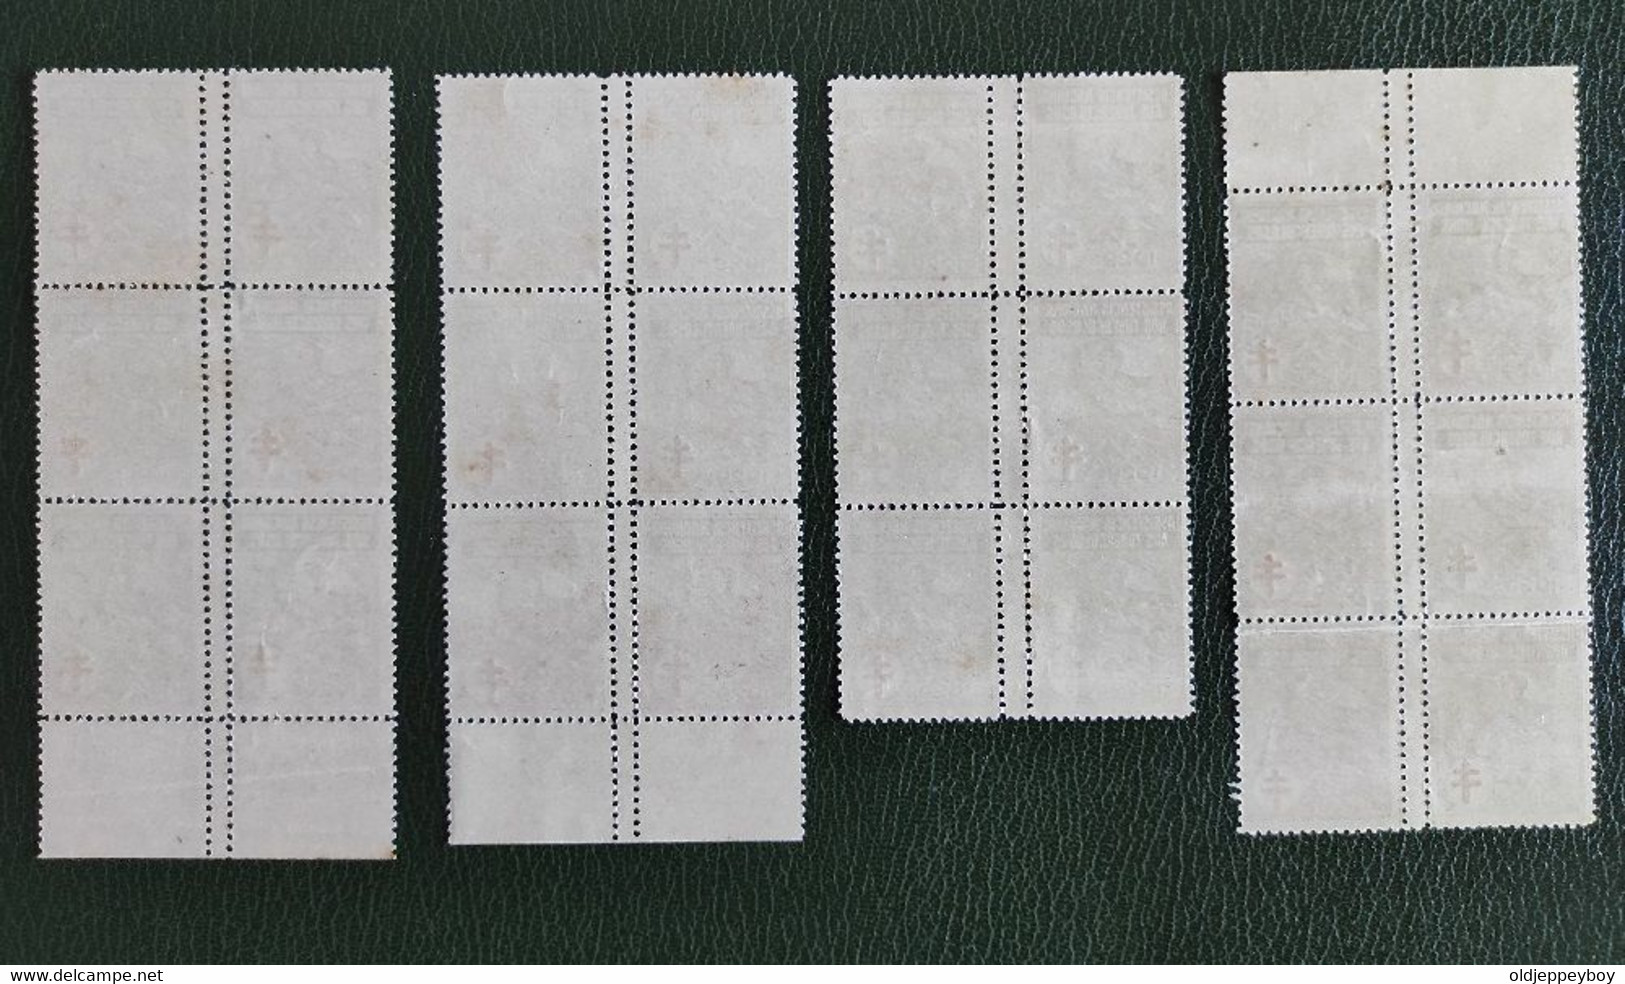 ERRO VARIEDADE Portugal 1929 Full Set Blocks Of 6 With Perforation Error Variety Assistençia Very Rare In This Format - Ongebruikt